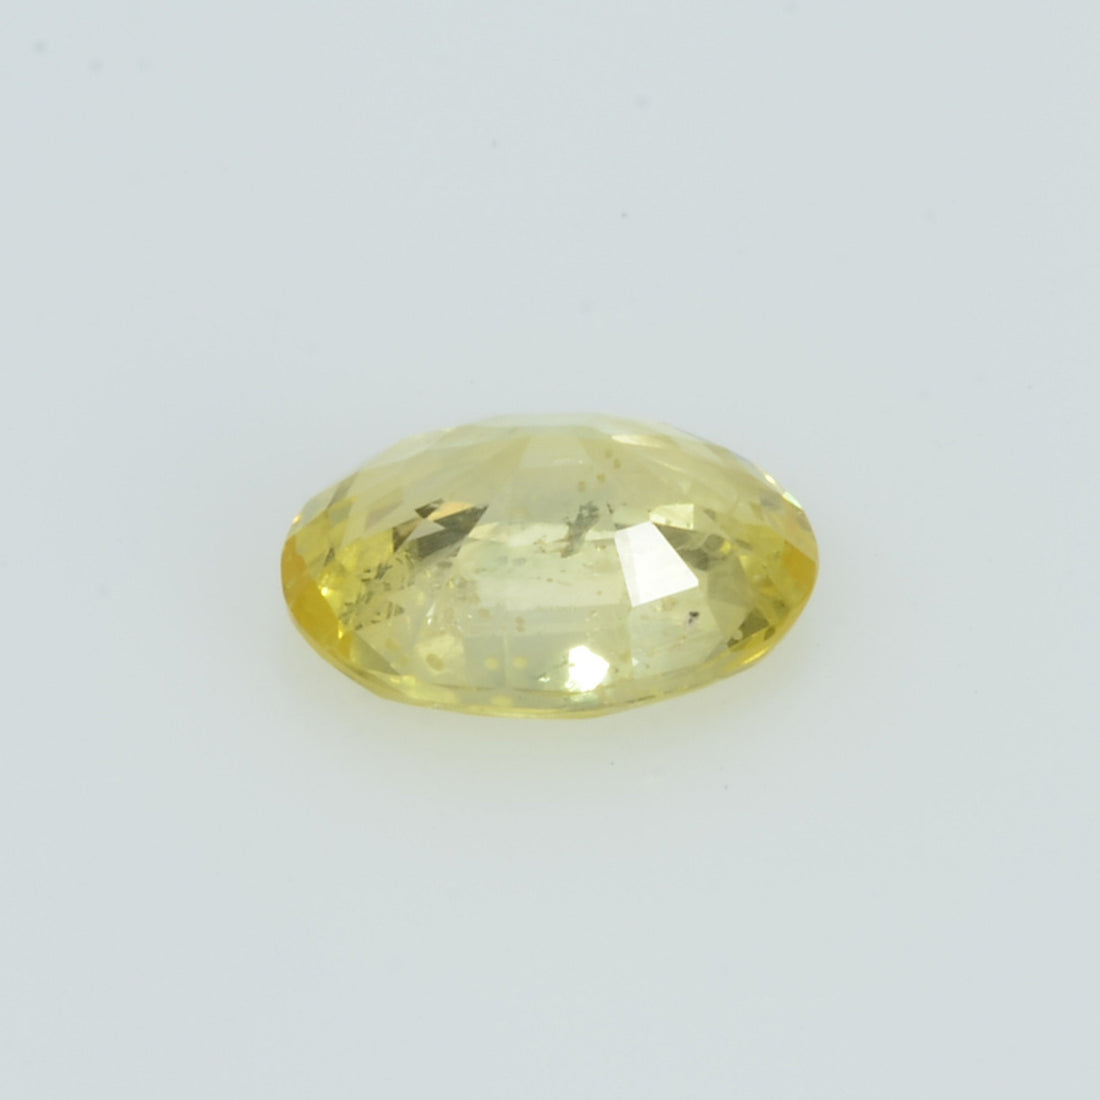 0.95 Cts Natural Yellow Sapphire Loose Gemstone Oval Cut - Thai Gems Export Ltd.